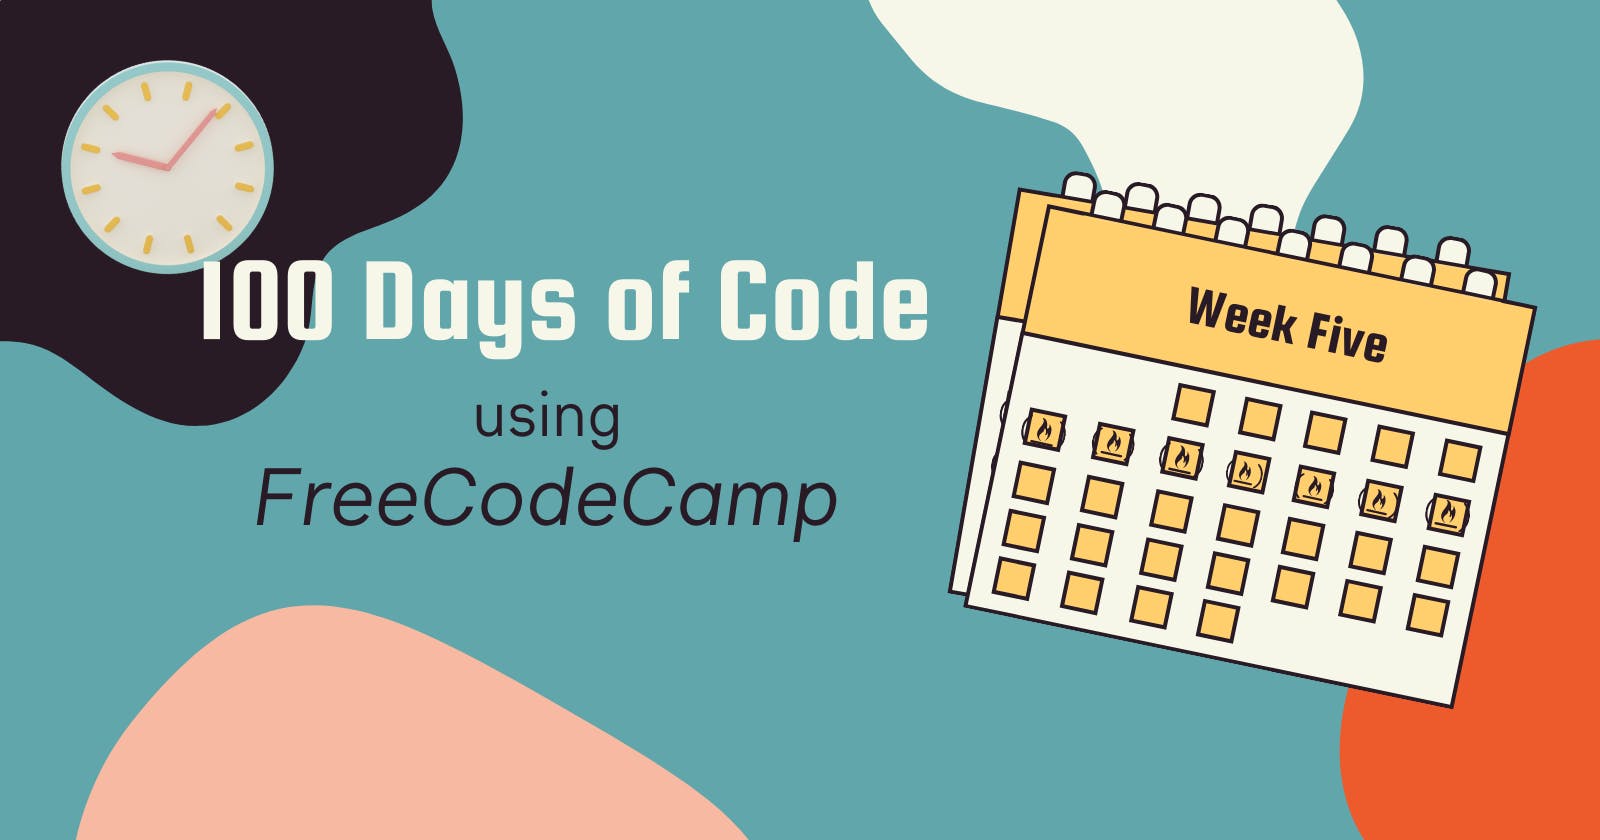 100DaysOfCode using FreeCodeCamp - Week 5